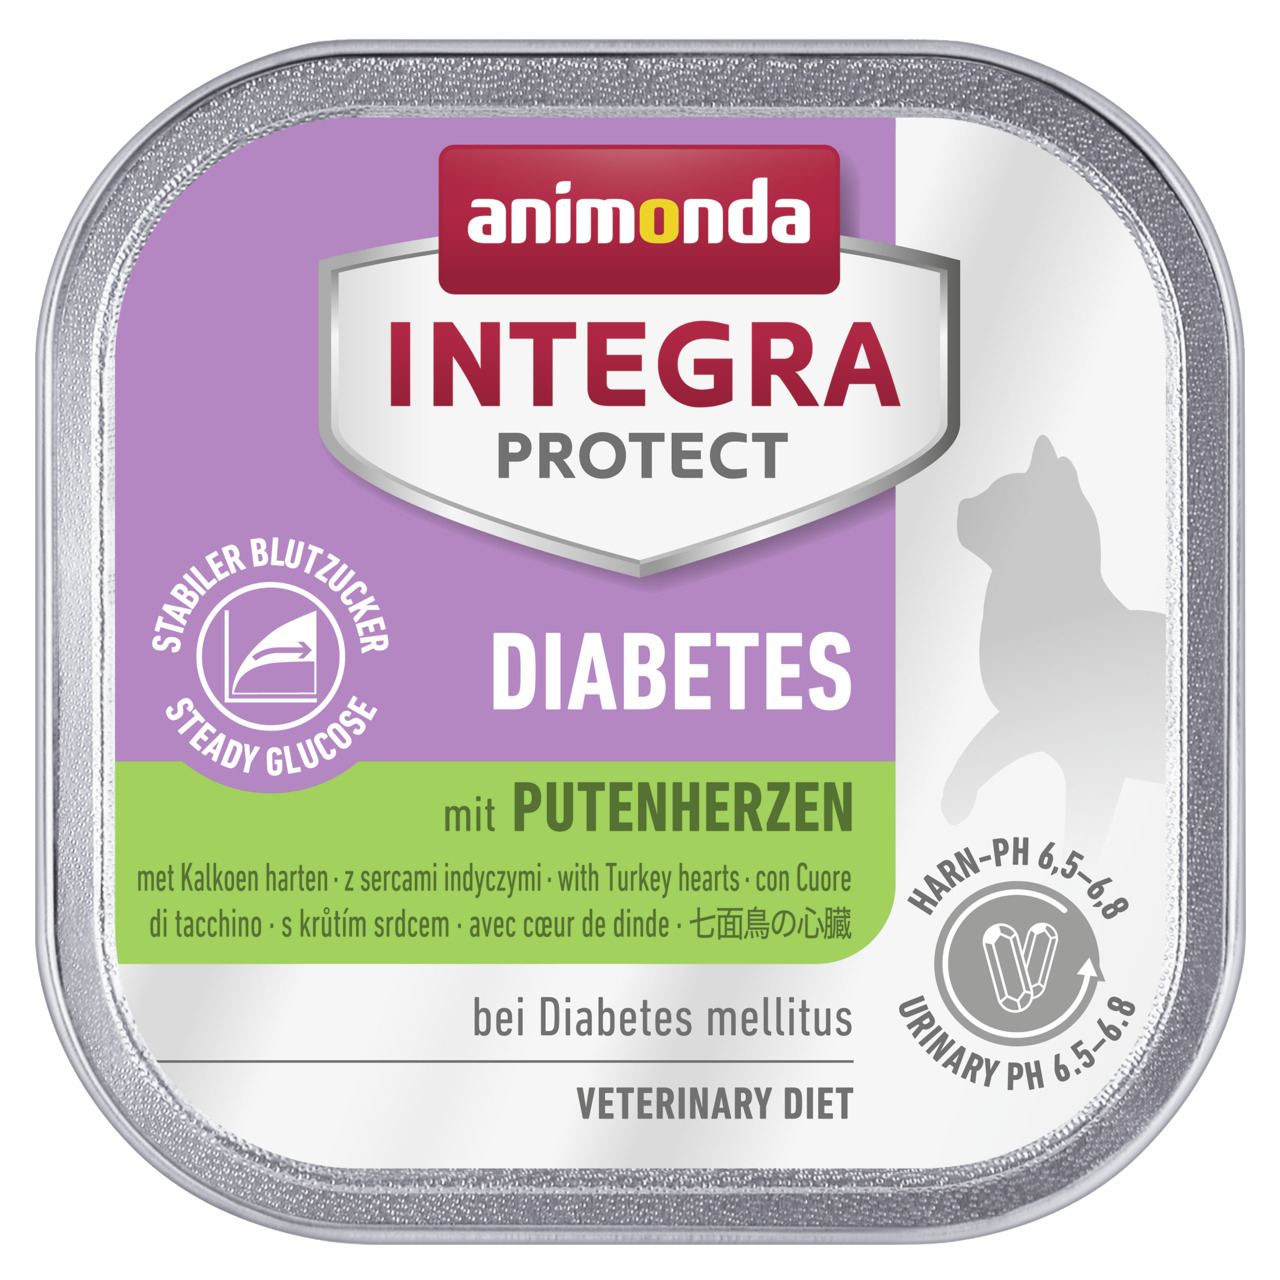 Sparpaket 32 x 100 g Animonda Integra Protect Diabetes mit Putenherzen Katzen Nassfutter